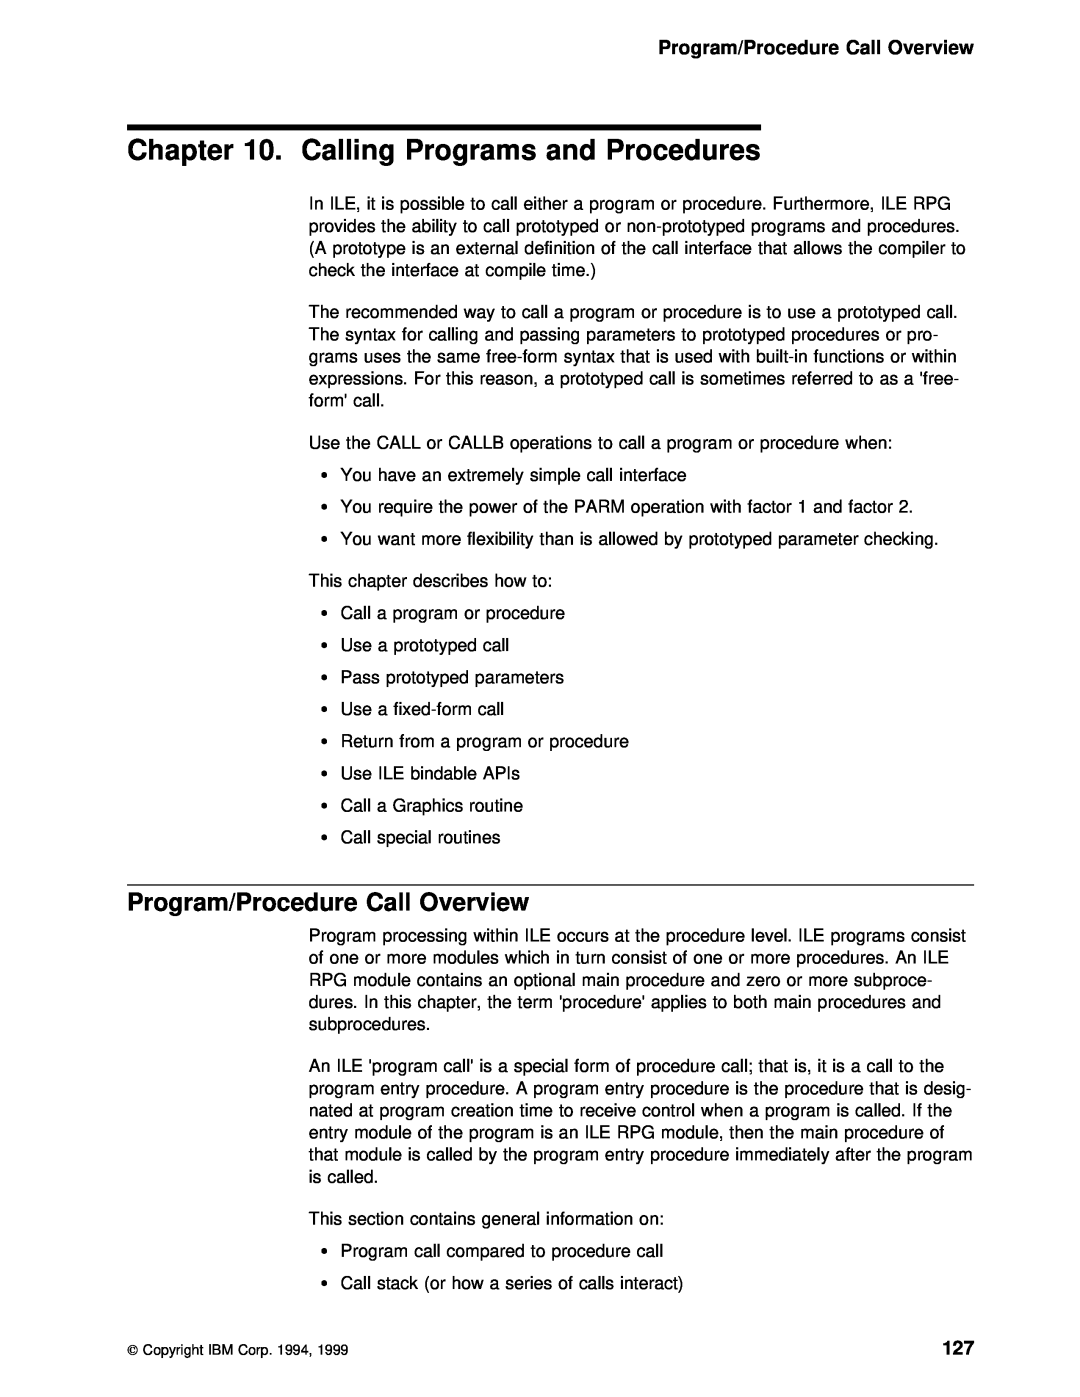 IBM AS/400 manual Calling Programs and Procedures, Program/Procedure Call Overview 